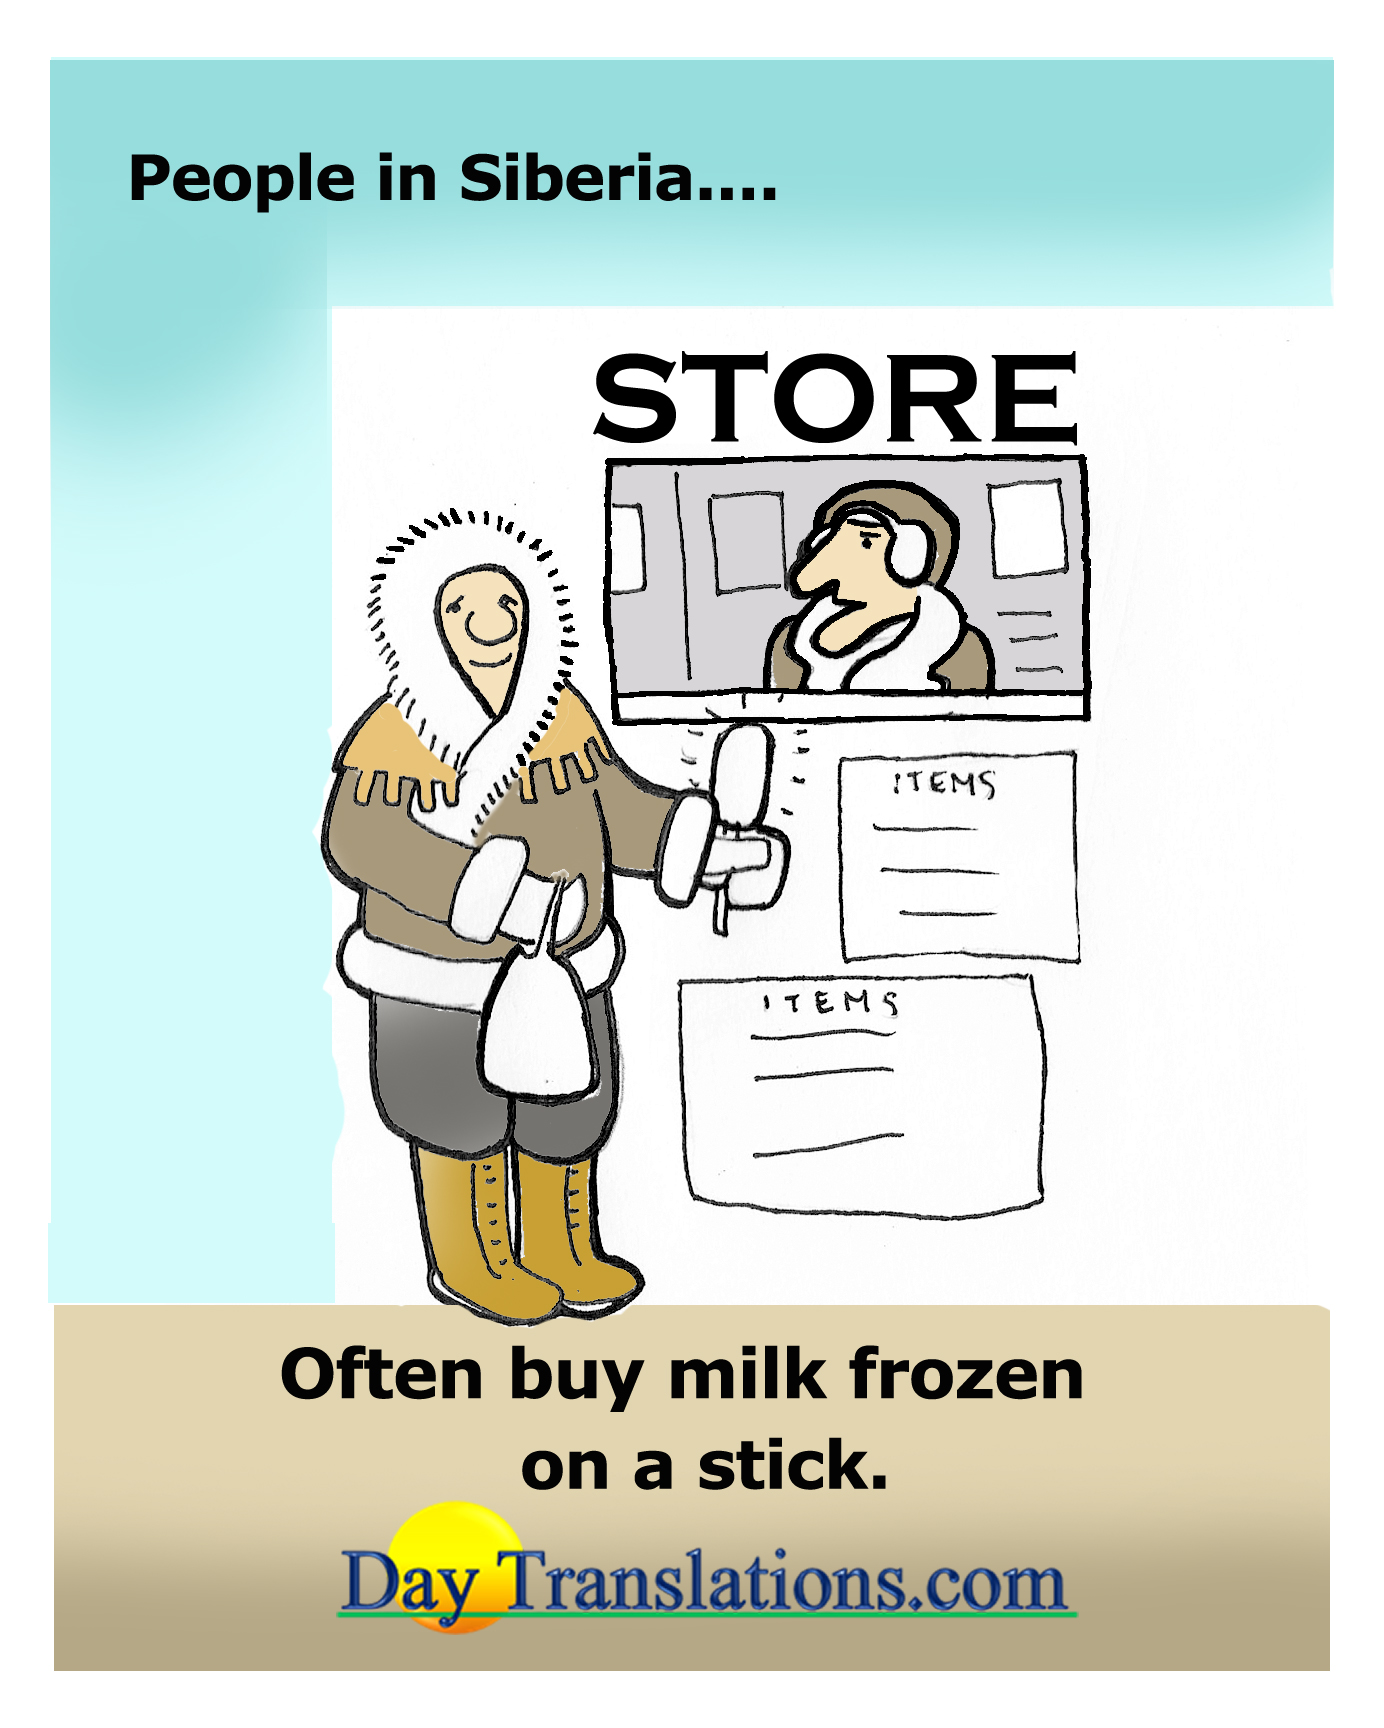 Siberia Frozen Milk on Stick - Day News Cartoon Of The Day